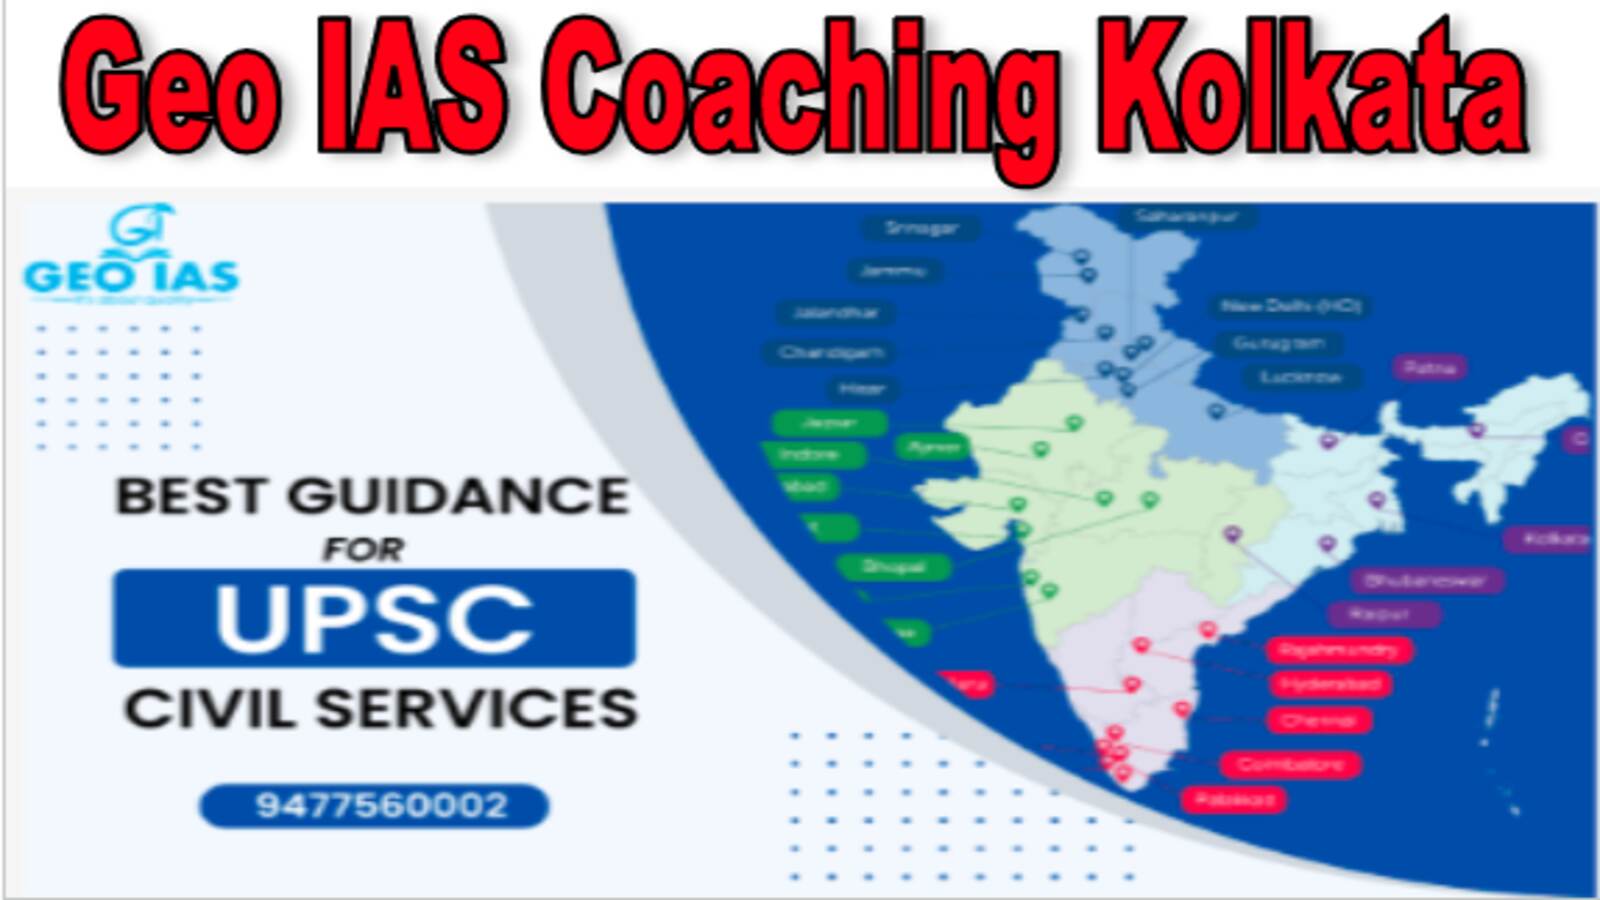 Geo IAS Coaching Kolkata